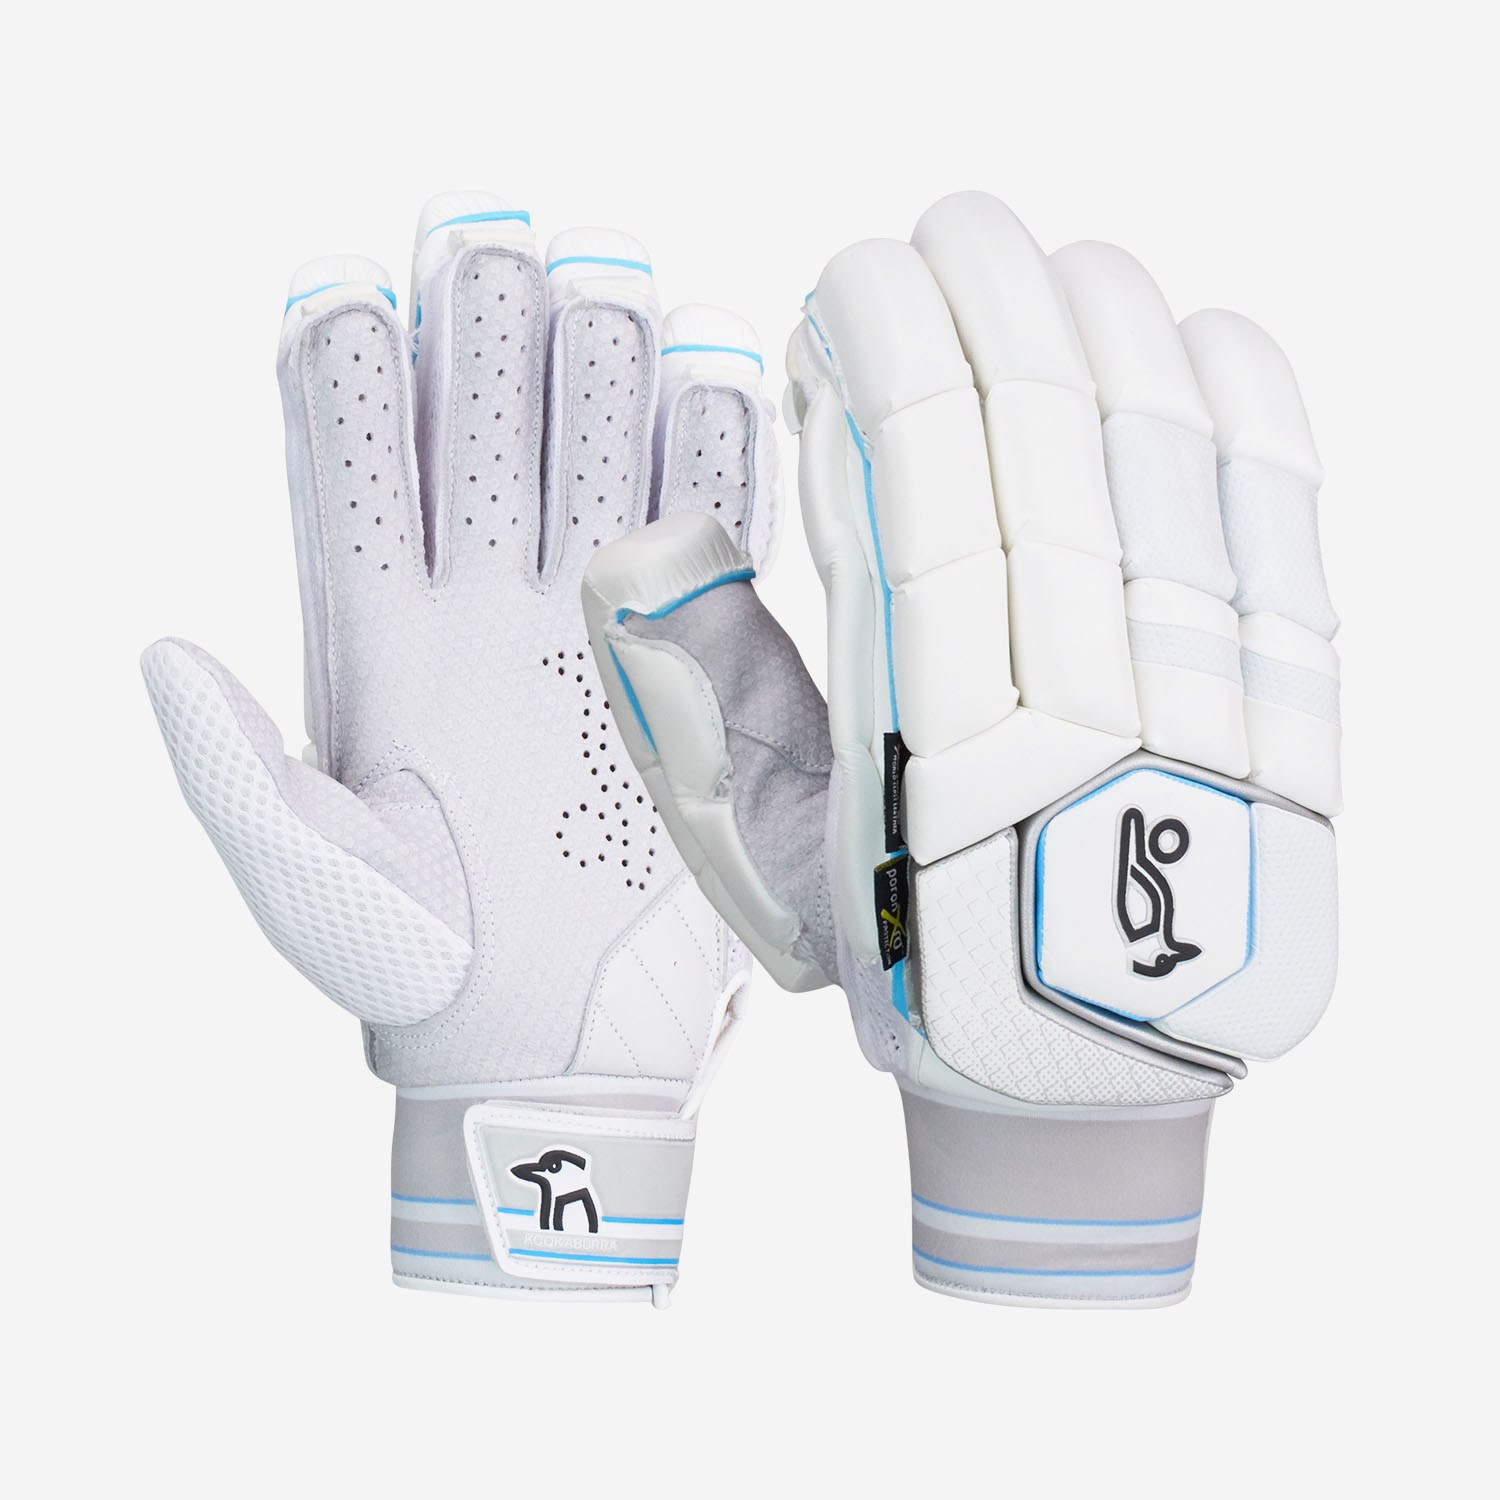 Kookaburra Ghost 4.2 Batting Gloves New 2020 